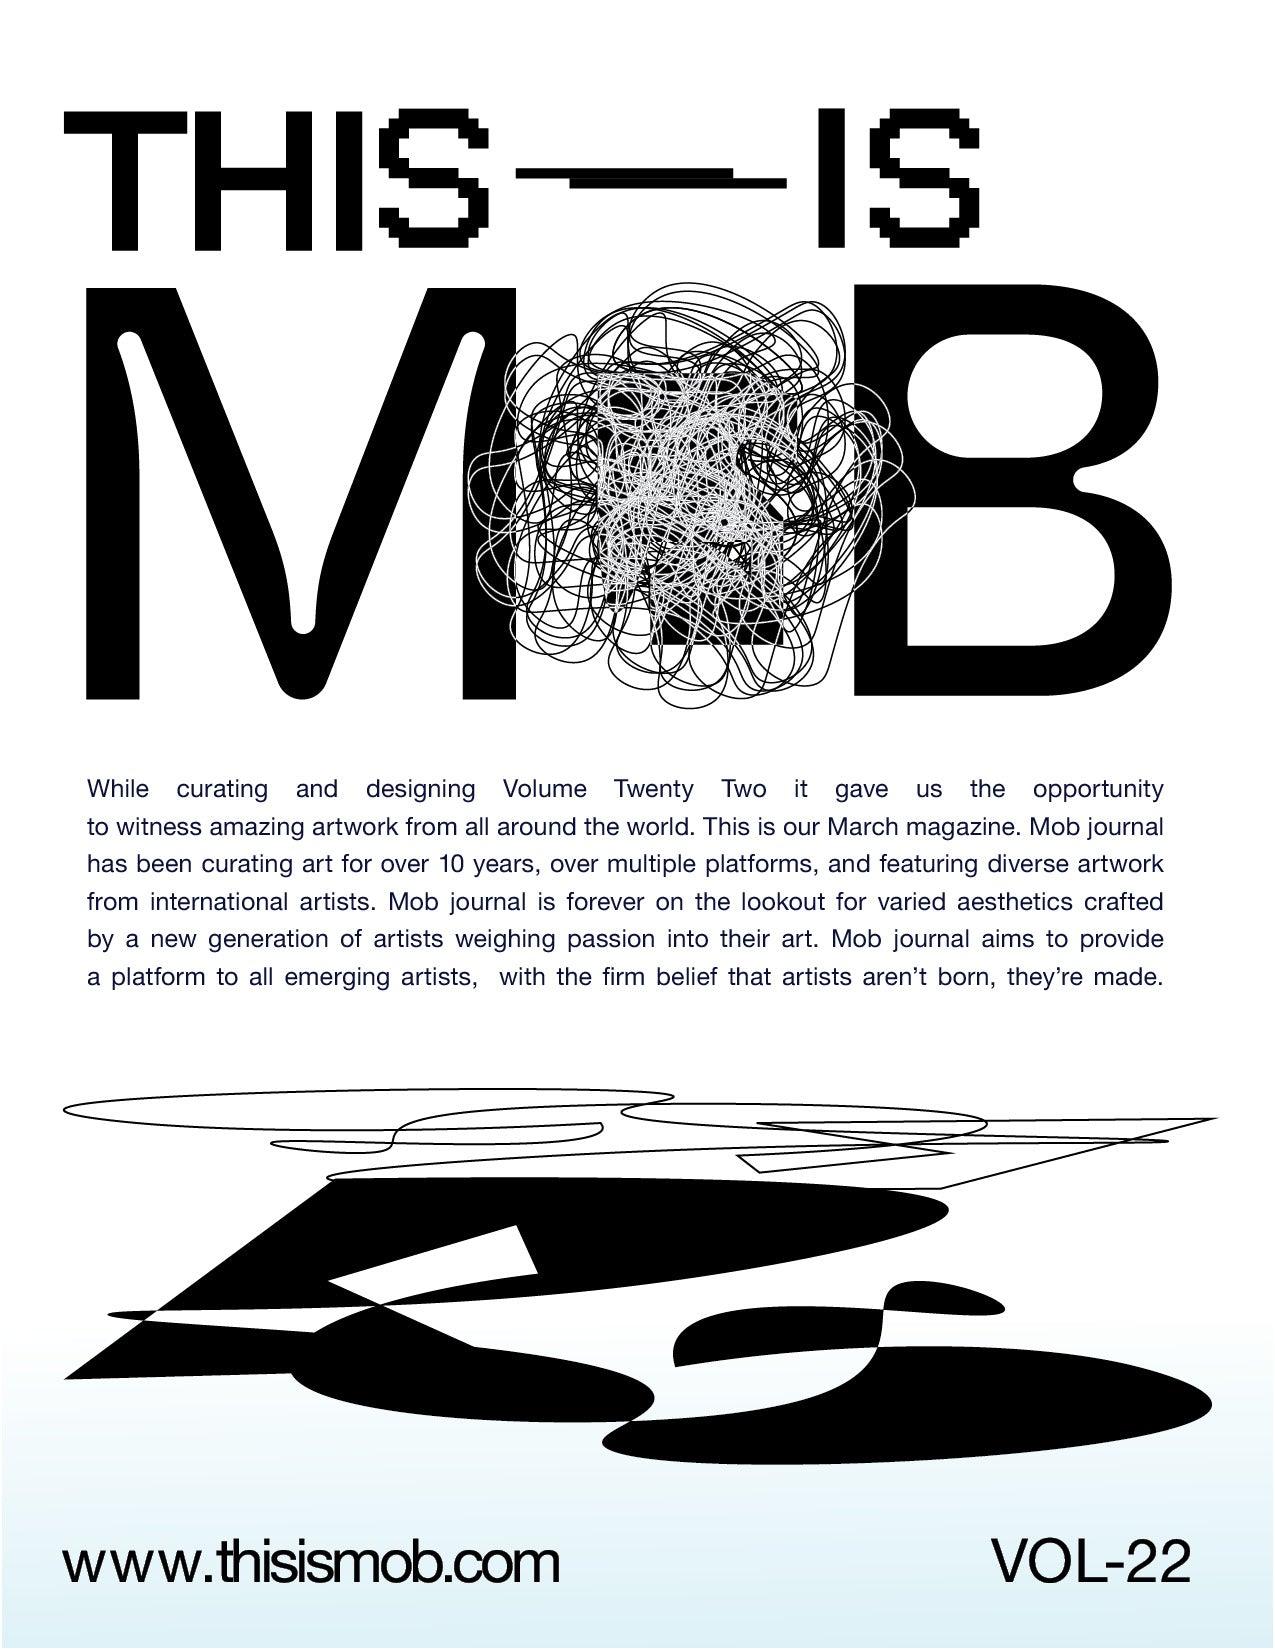 MOB JOURNAL | VOLUME TWENTY TWO | ISSUE #18 - Mob Journal